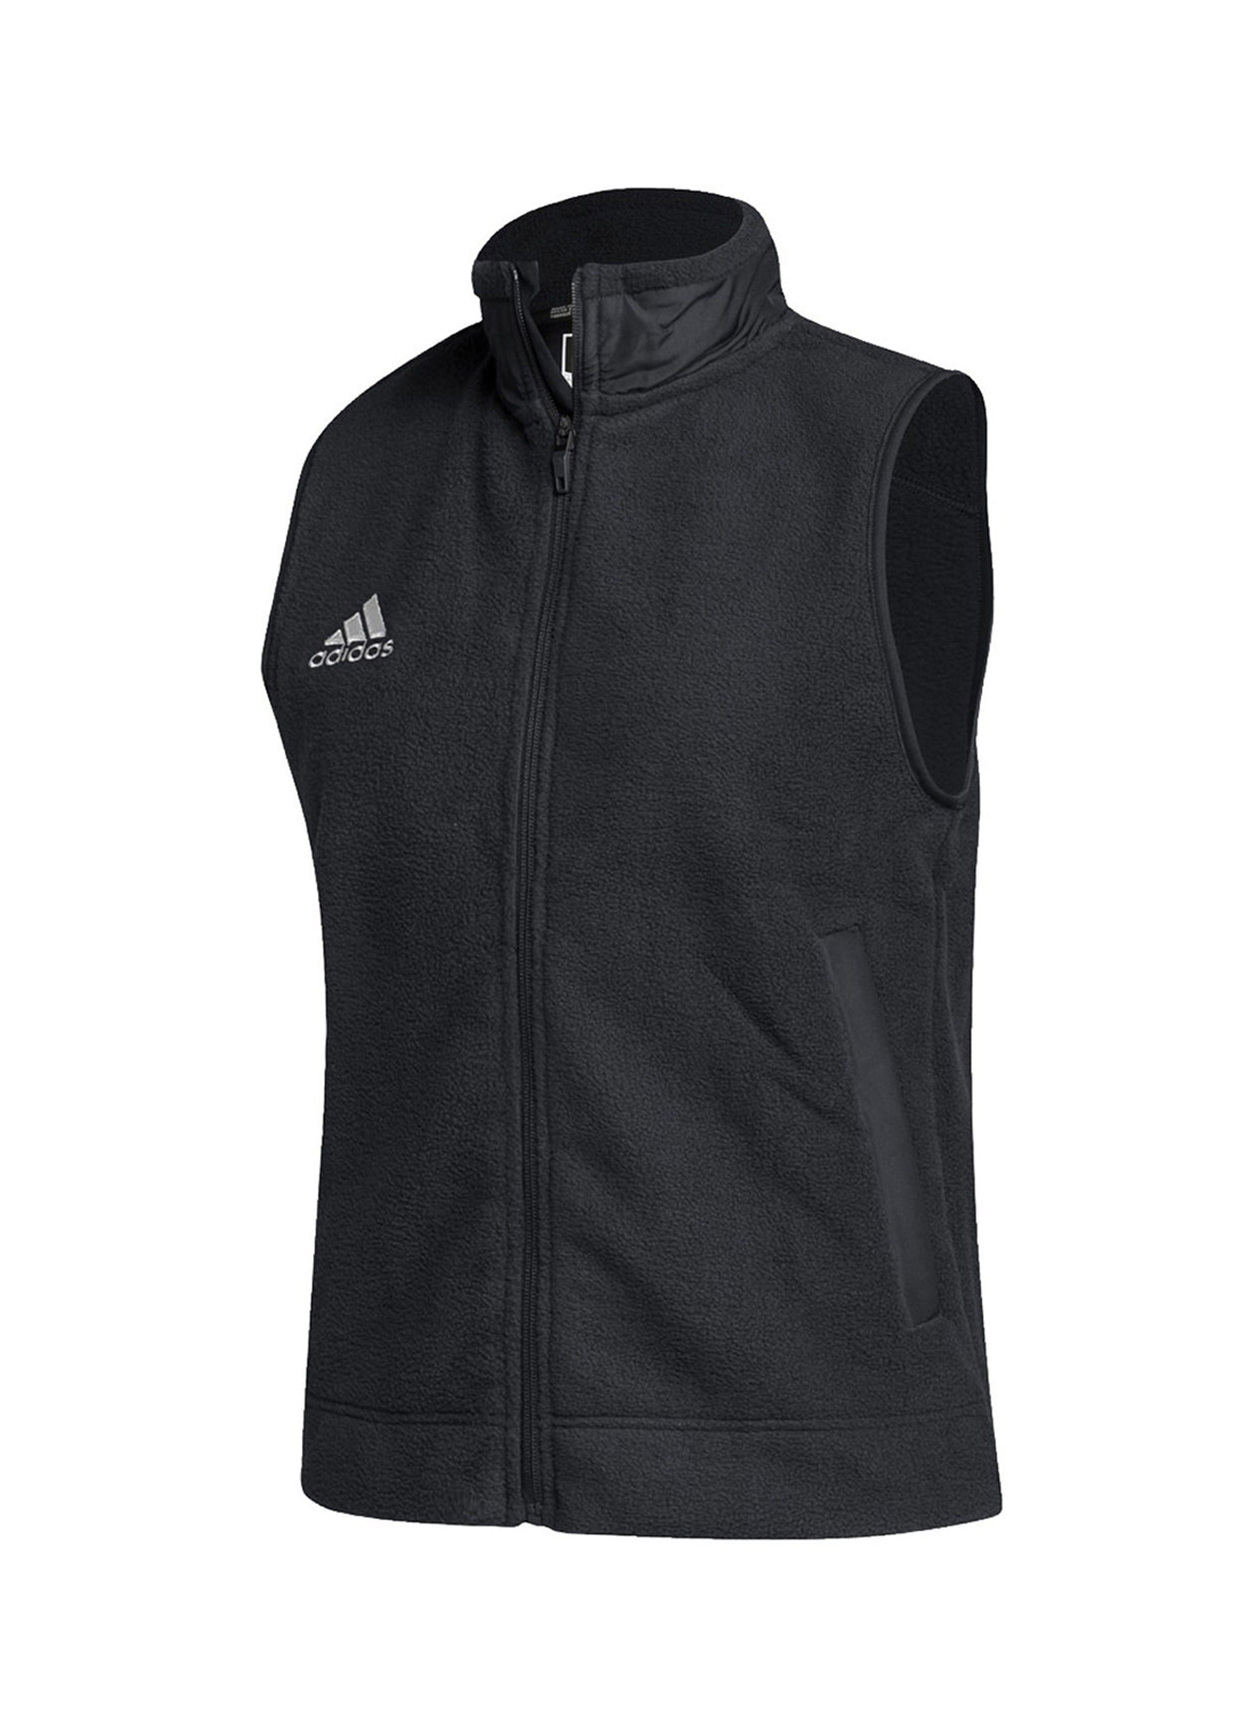 Adidas Women's Black / White Stadium Vest